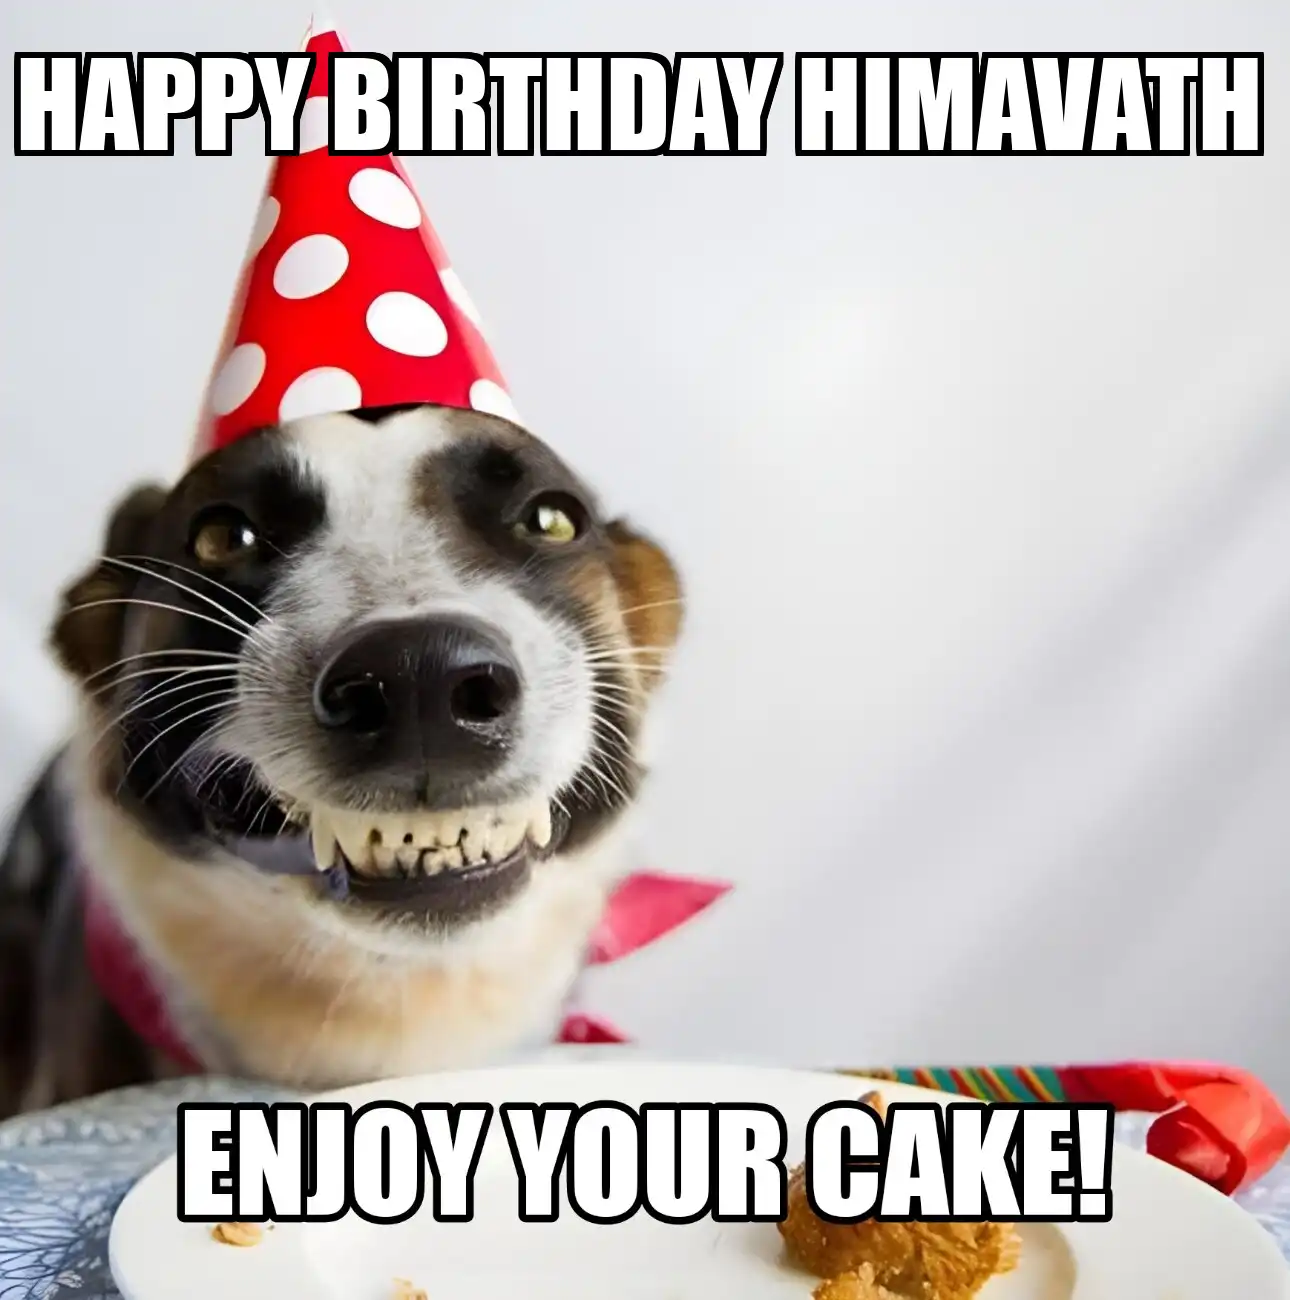 Happy Birthday Himavath Enjoy Your Cake Dog Meme